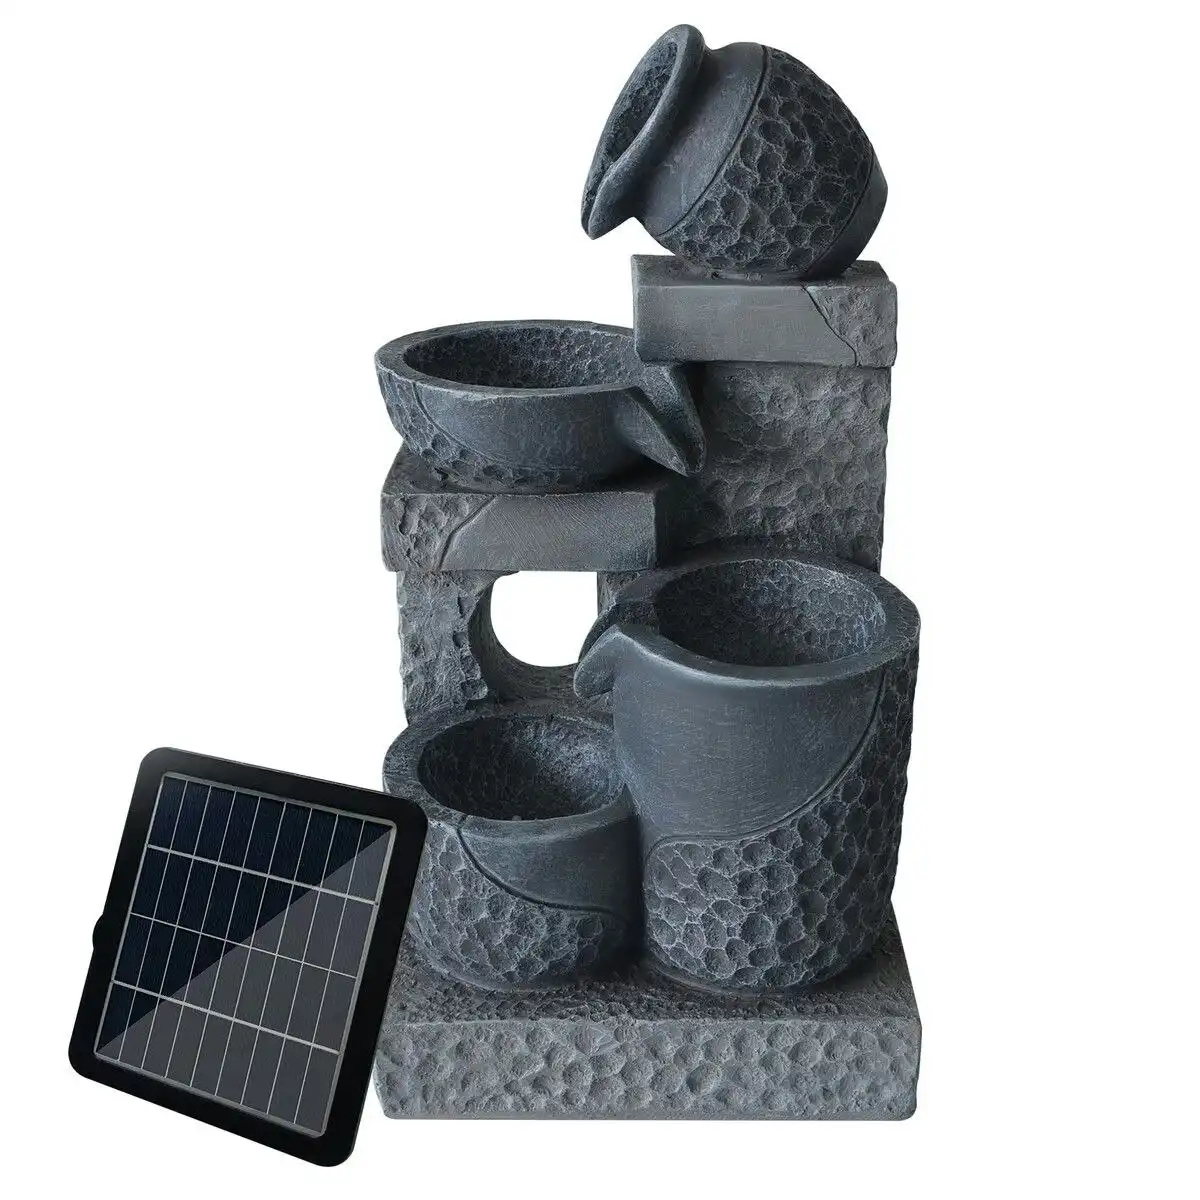 Maxkon Outdoor Solar Water Fountain Garden Features 4 Tier LED Bird Bath Indoor Rechargeable Panel